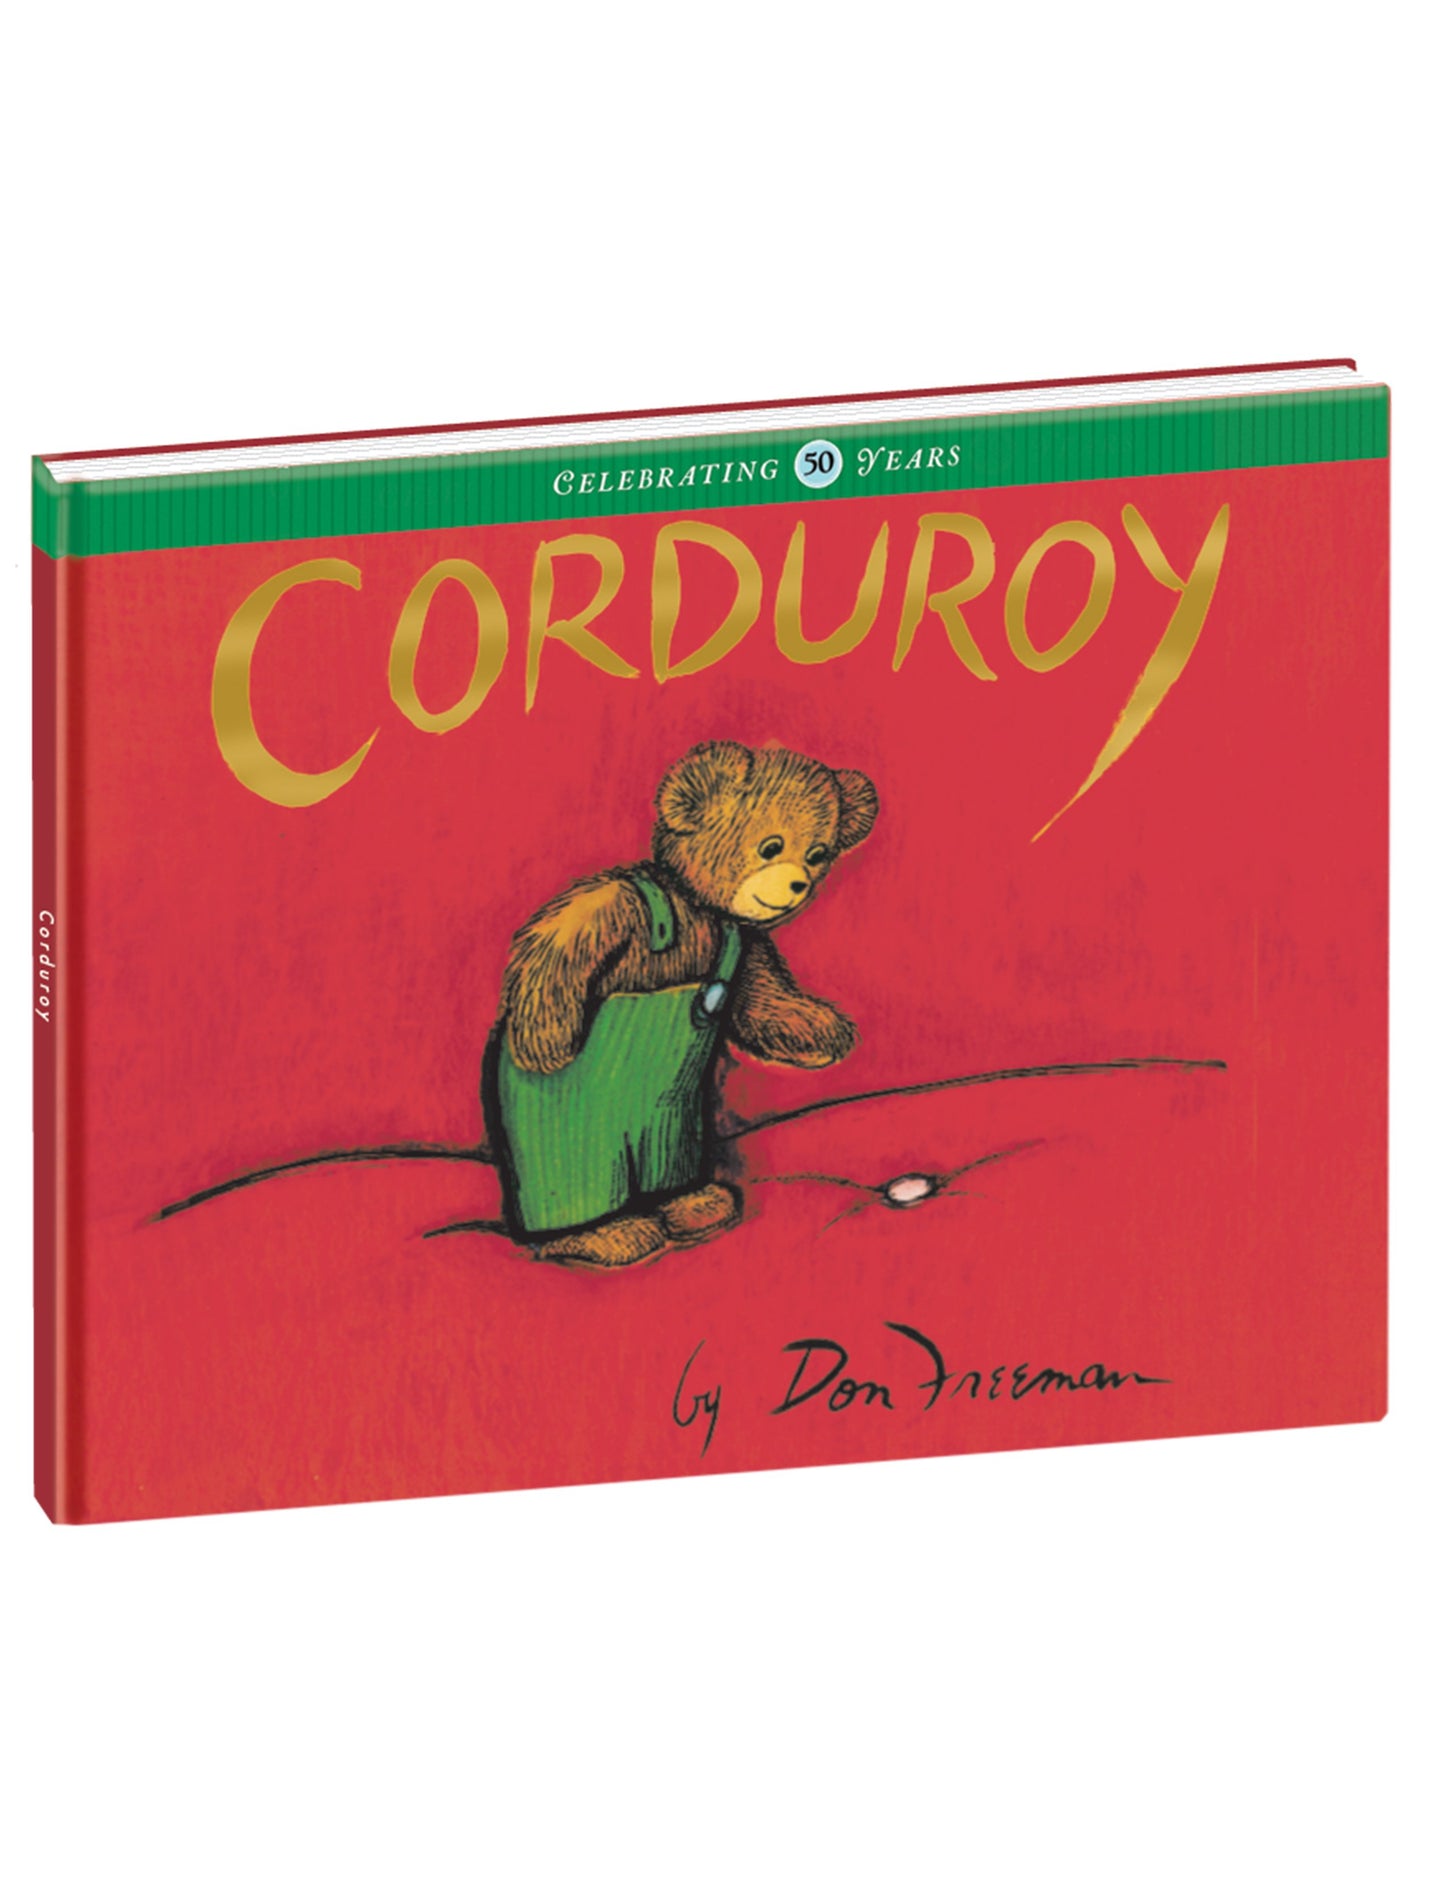 Corduroy hardcover book